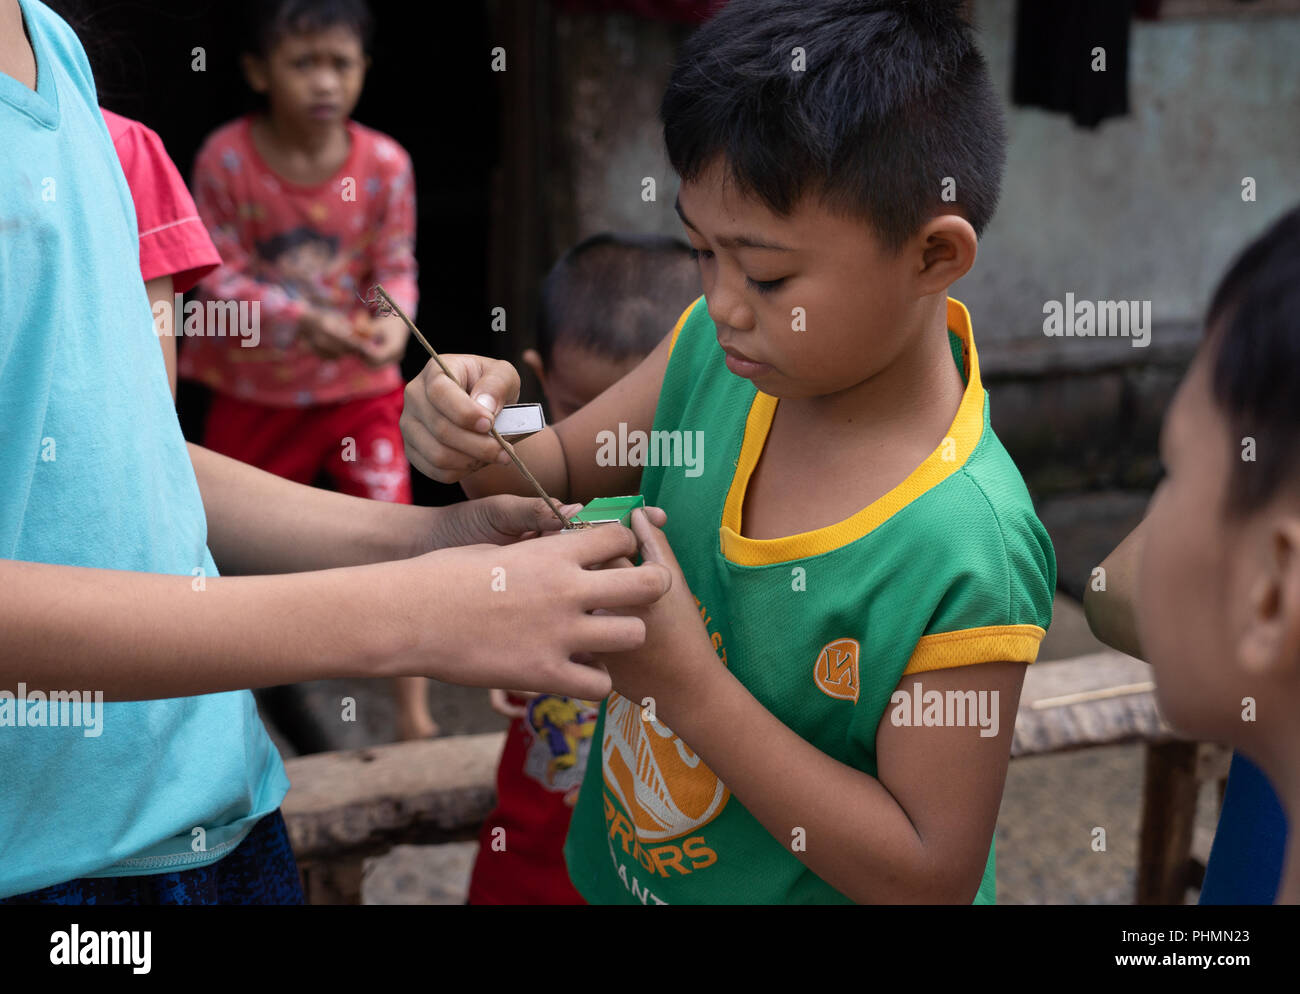 Filipino children partaking in the popular game of spider fighting. Stock Photo